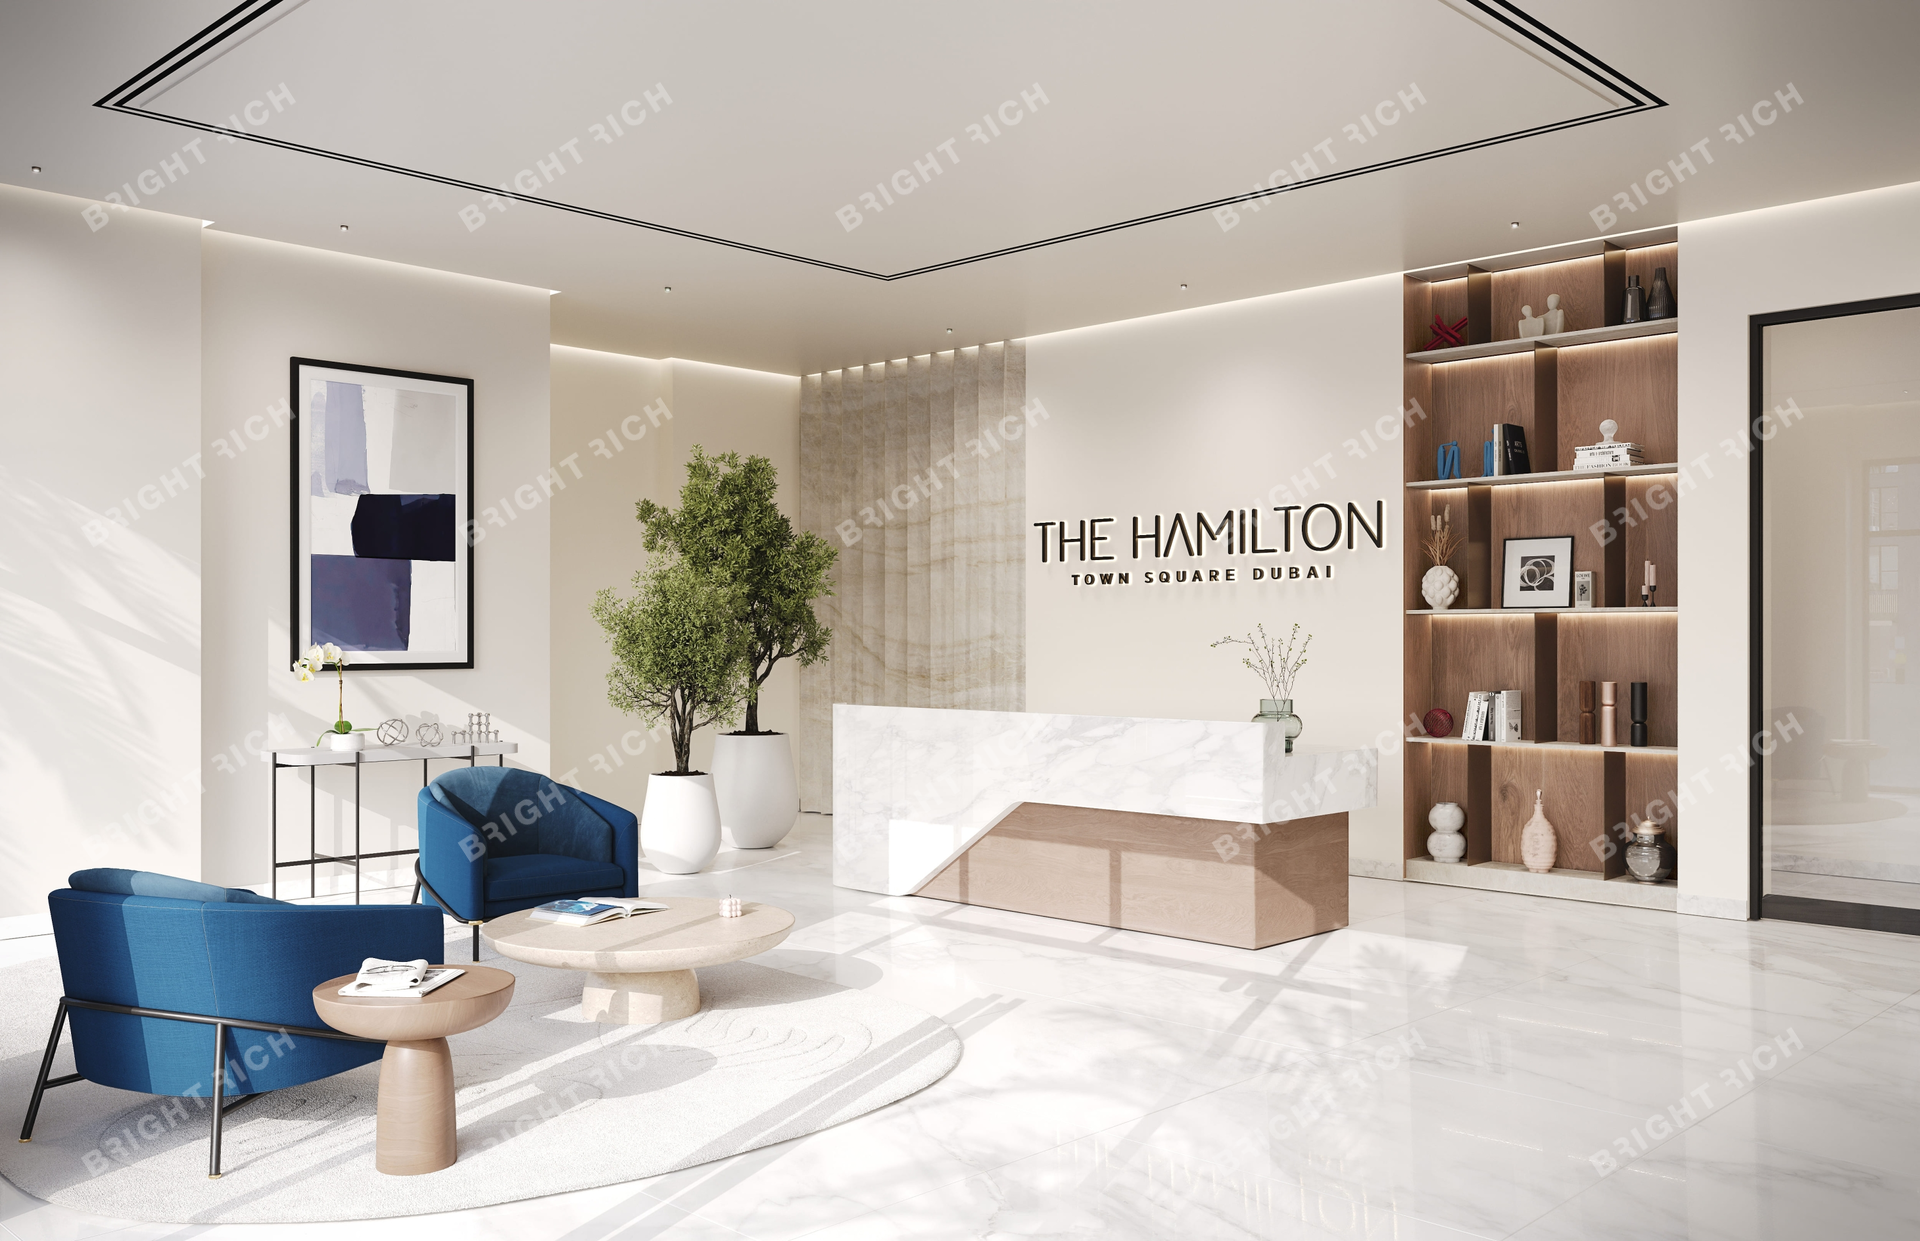 The Hamilton Residence, apart complex in Dubai - 3